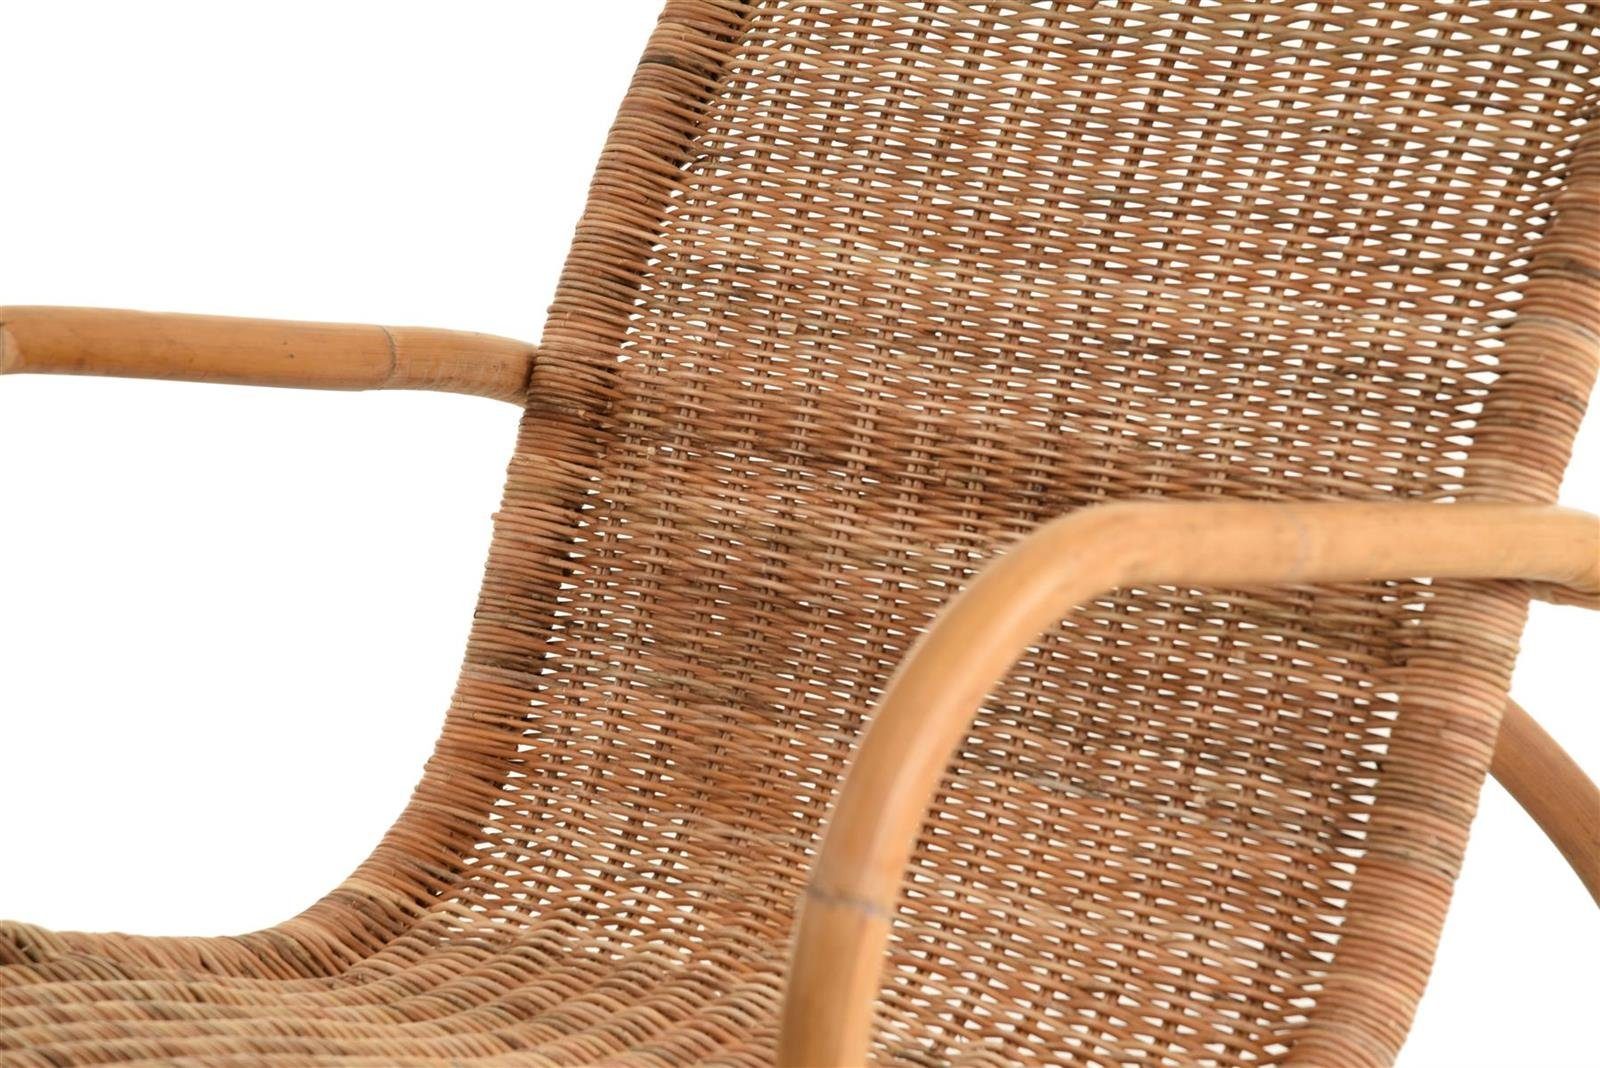 Krines Home Sessel Set/2 Rattansessel (Geflochten), Stil Korbstuhl mit Rattan aus mediterranem im Relax Armlehnen Naturrohr